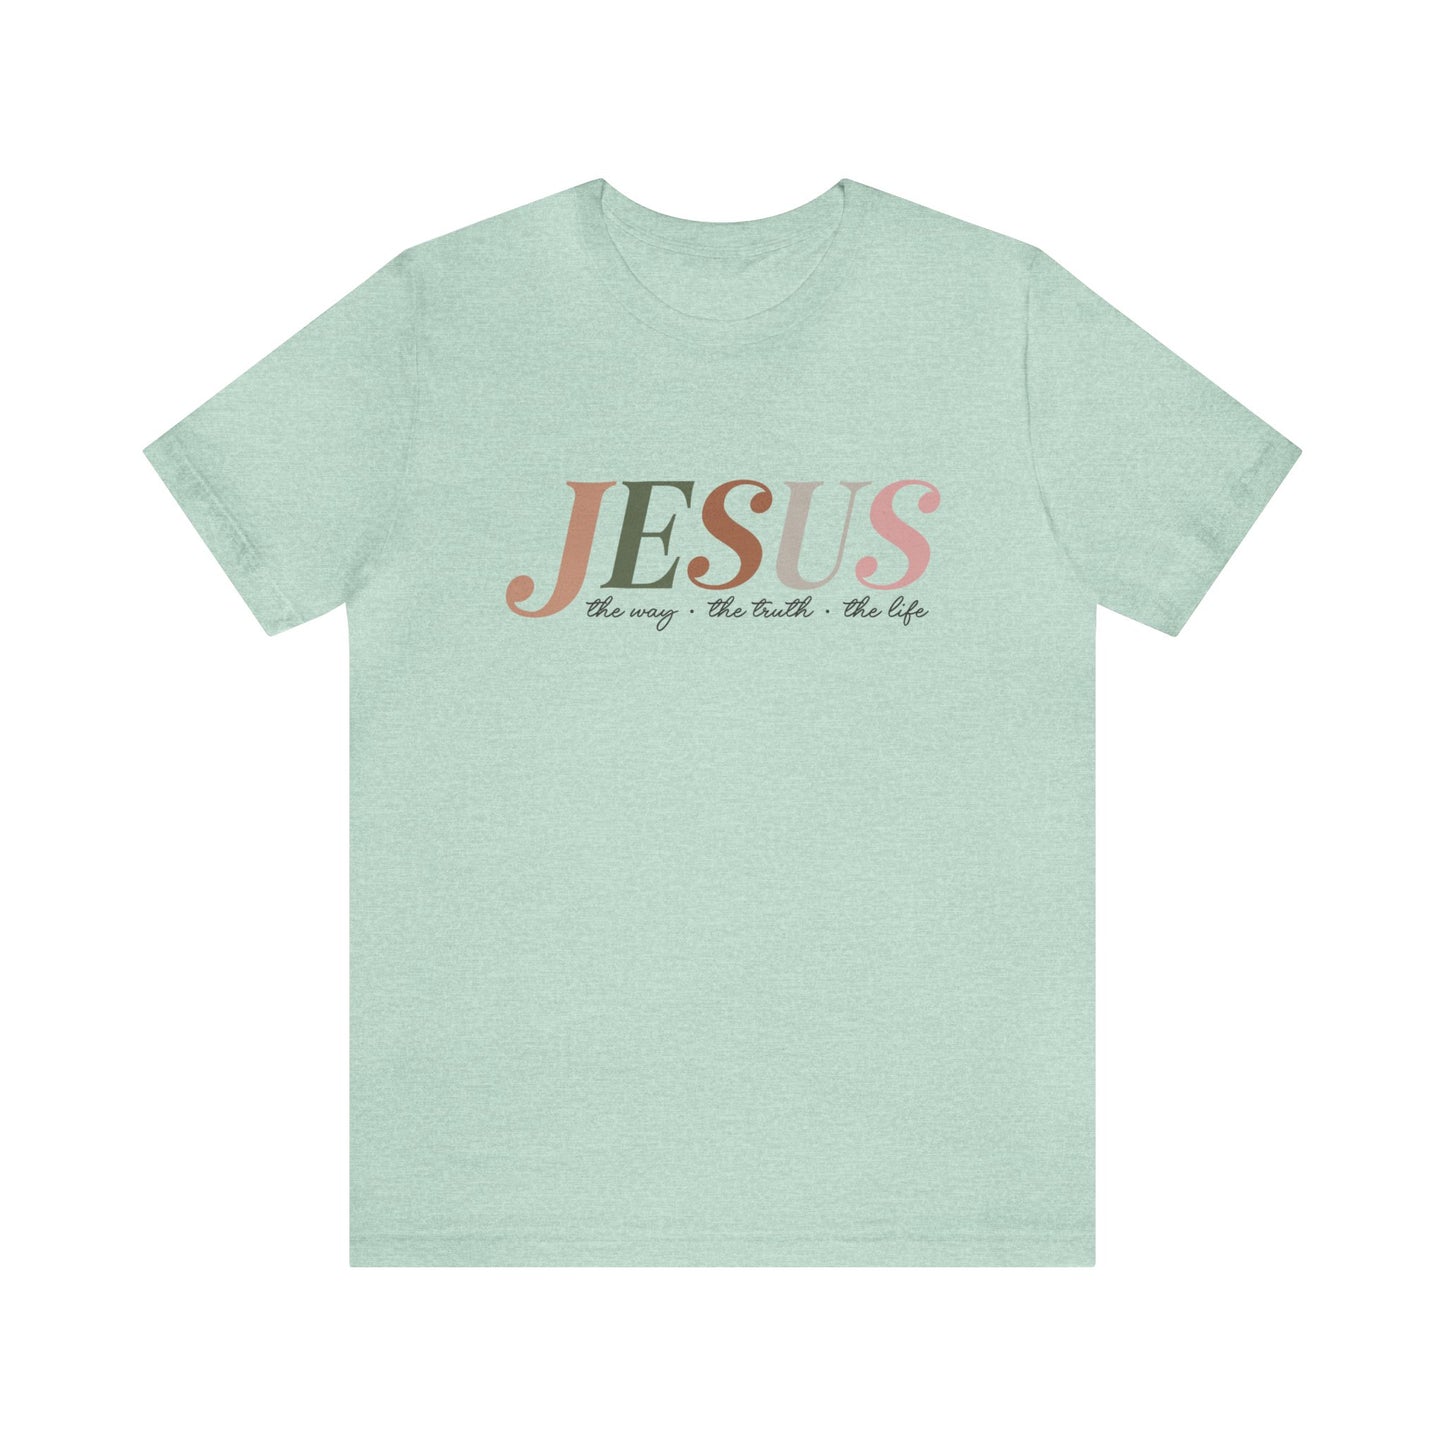 JESUS Women's Tshirt